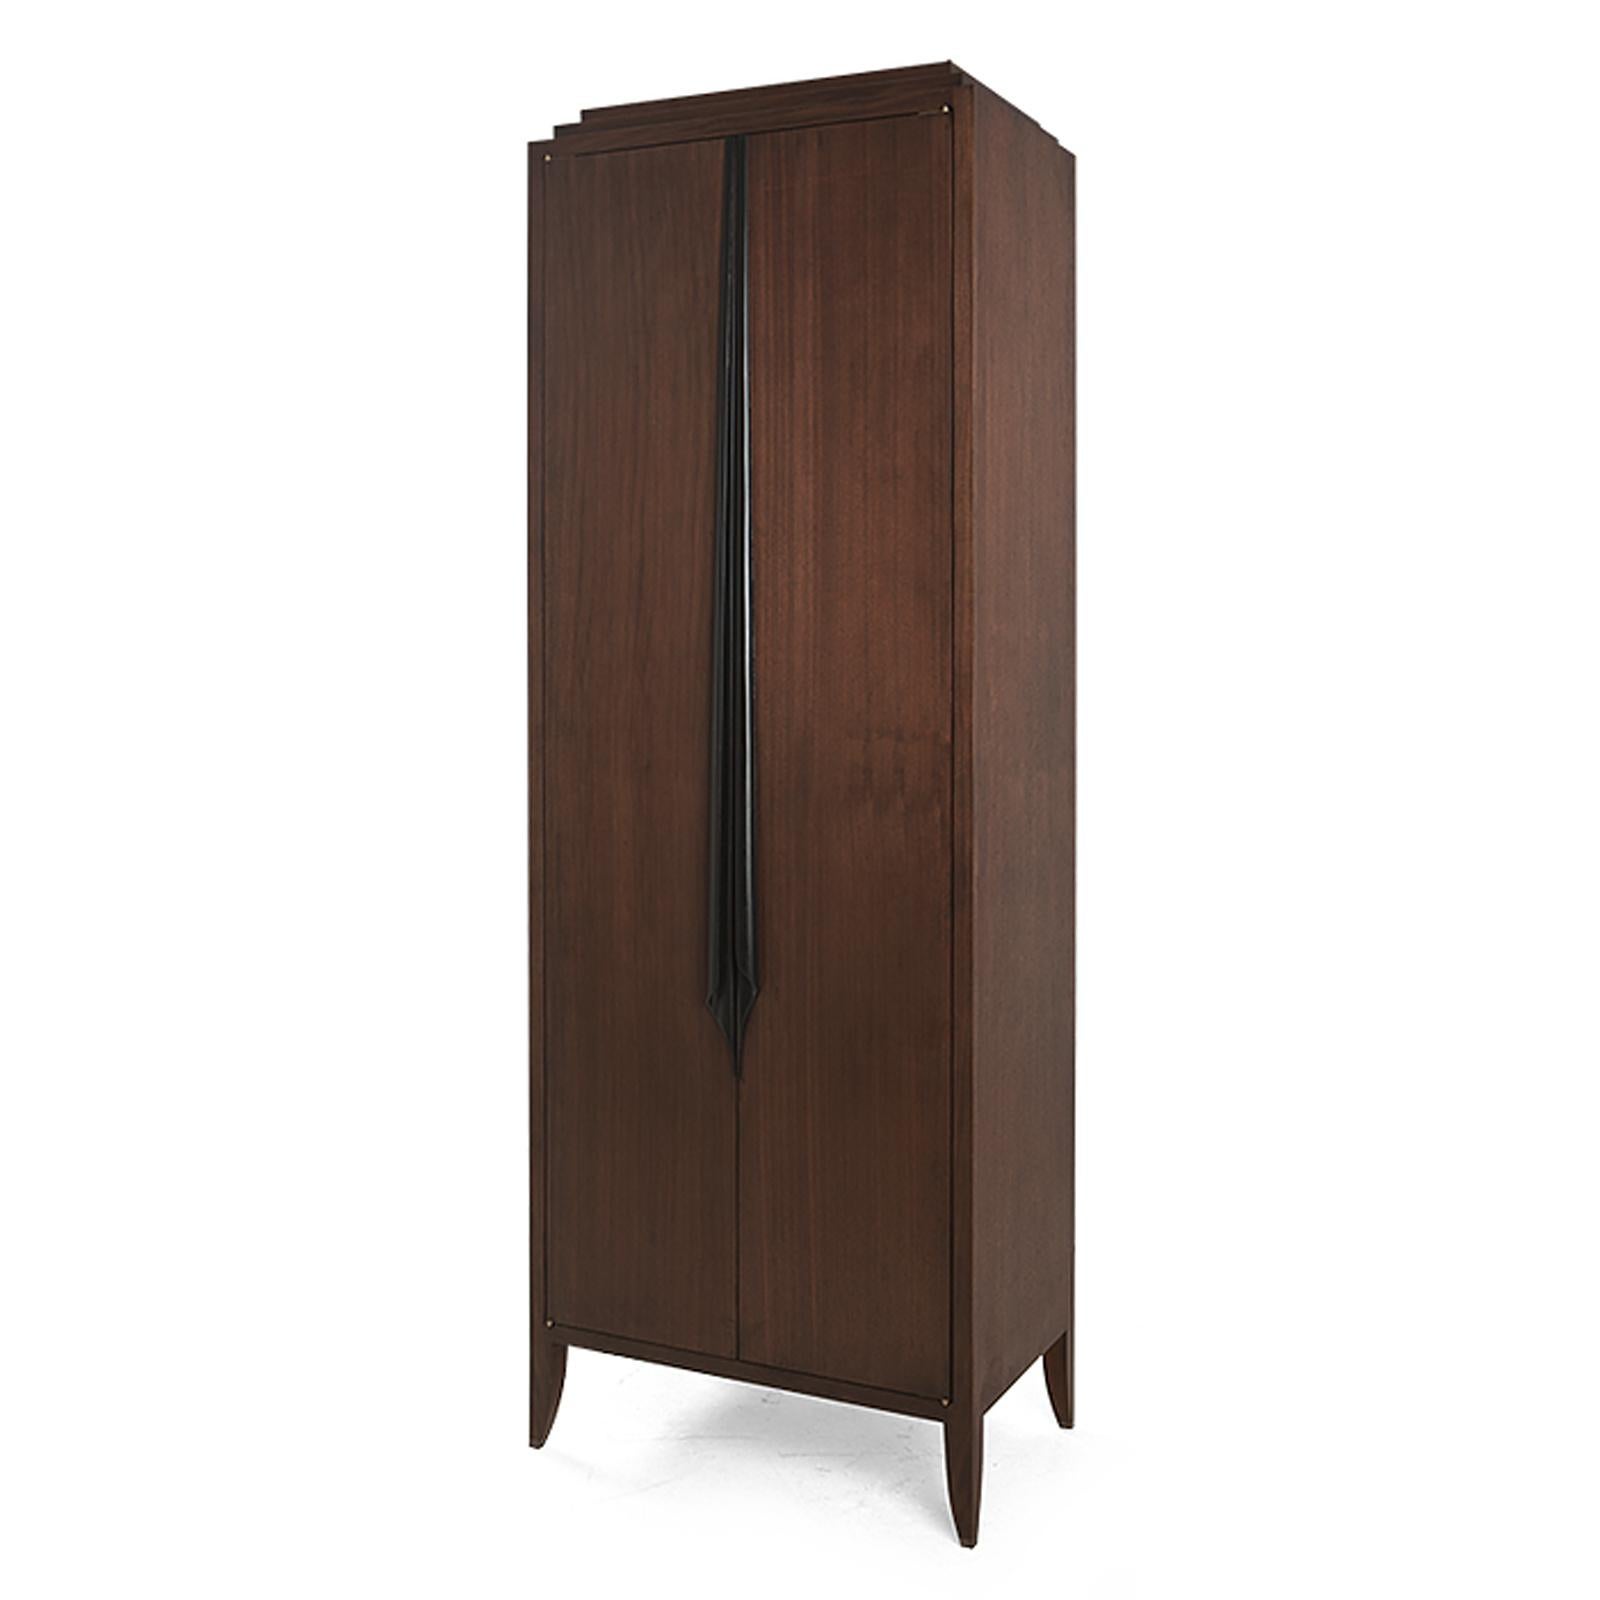 English Distinct Medium Cabinet in Mahogany Wood For Sale